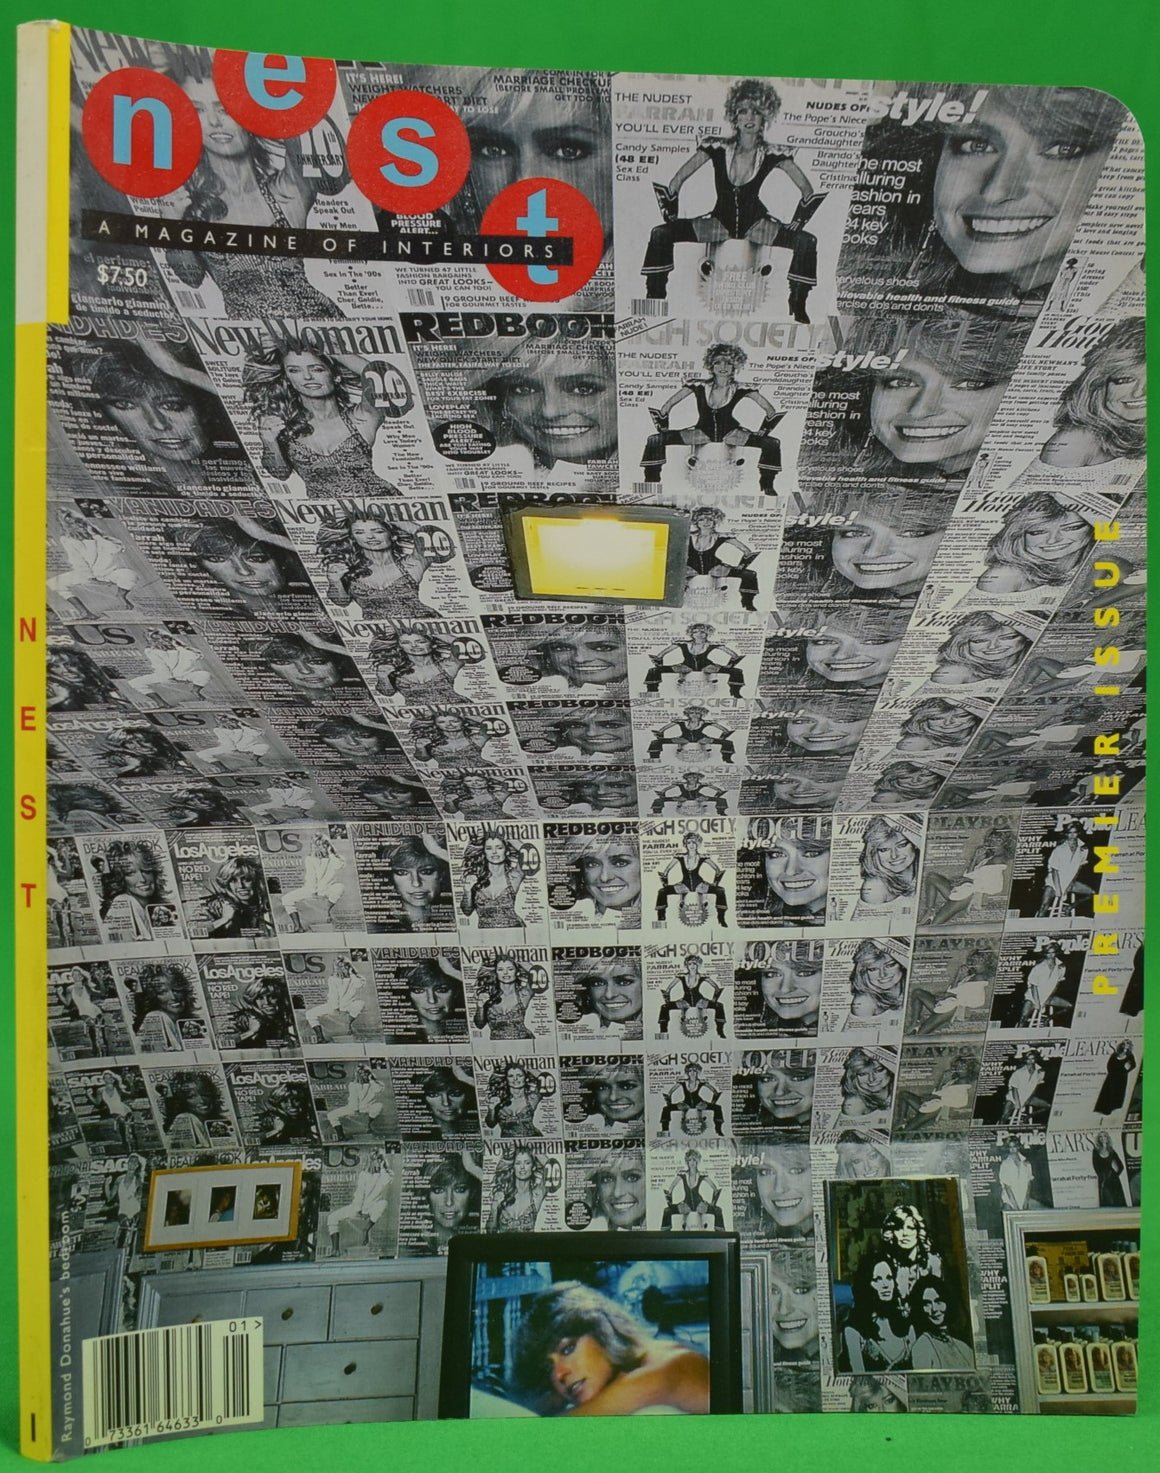 "Nest A Magazine Of Interiors 1997 Premier Issue #1" HOLTZMAN, Joseph